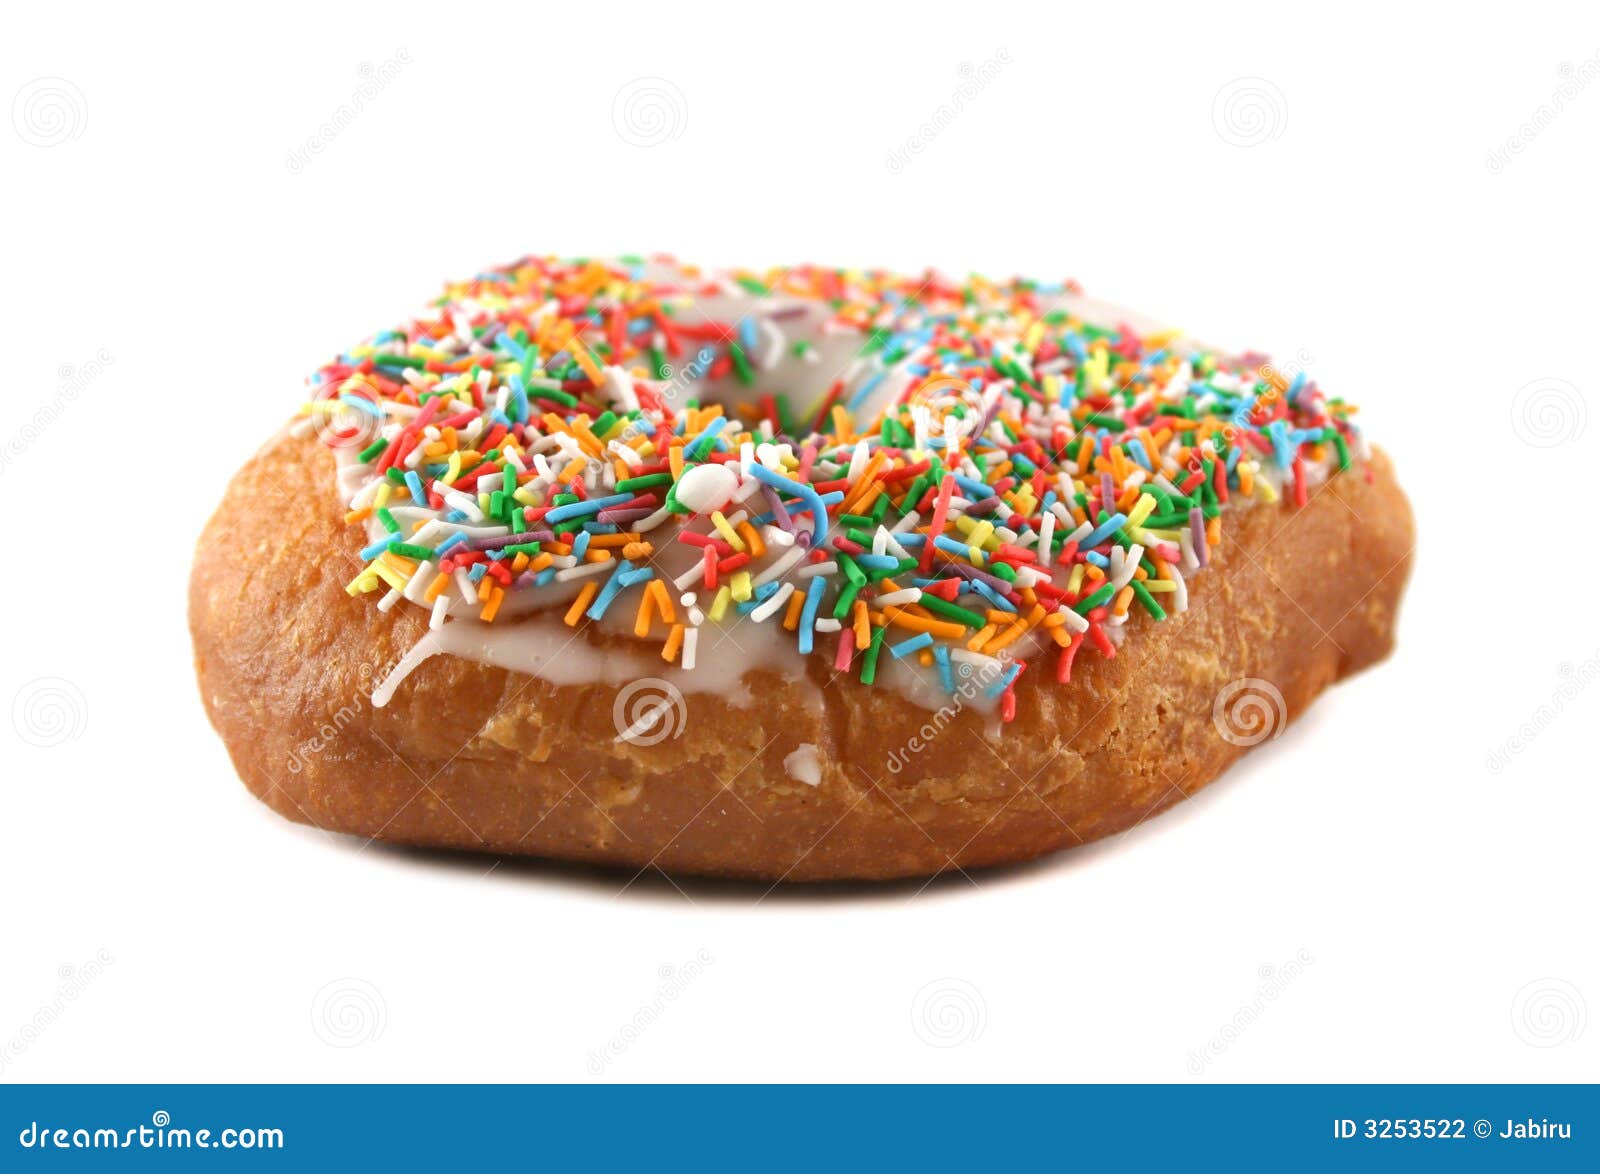 hundreds thousands doughnut